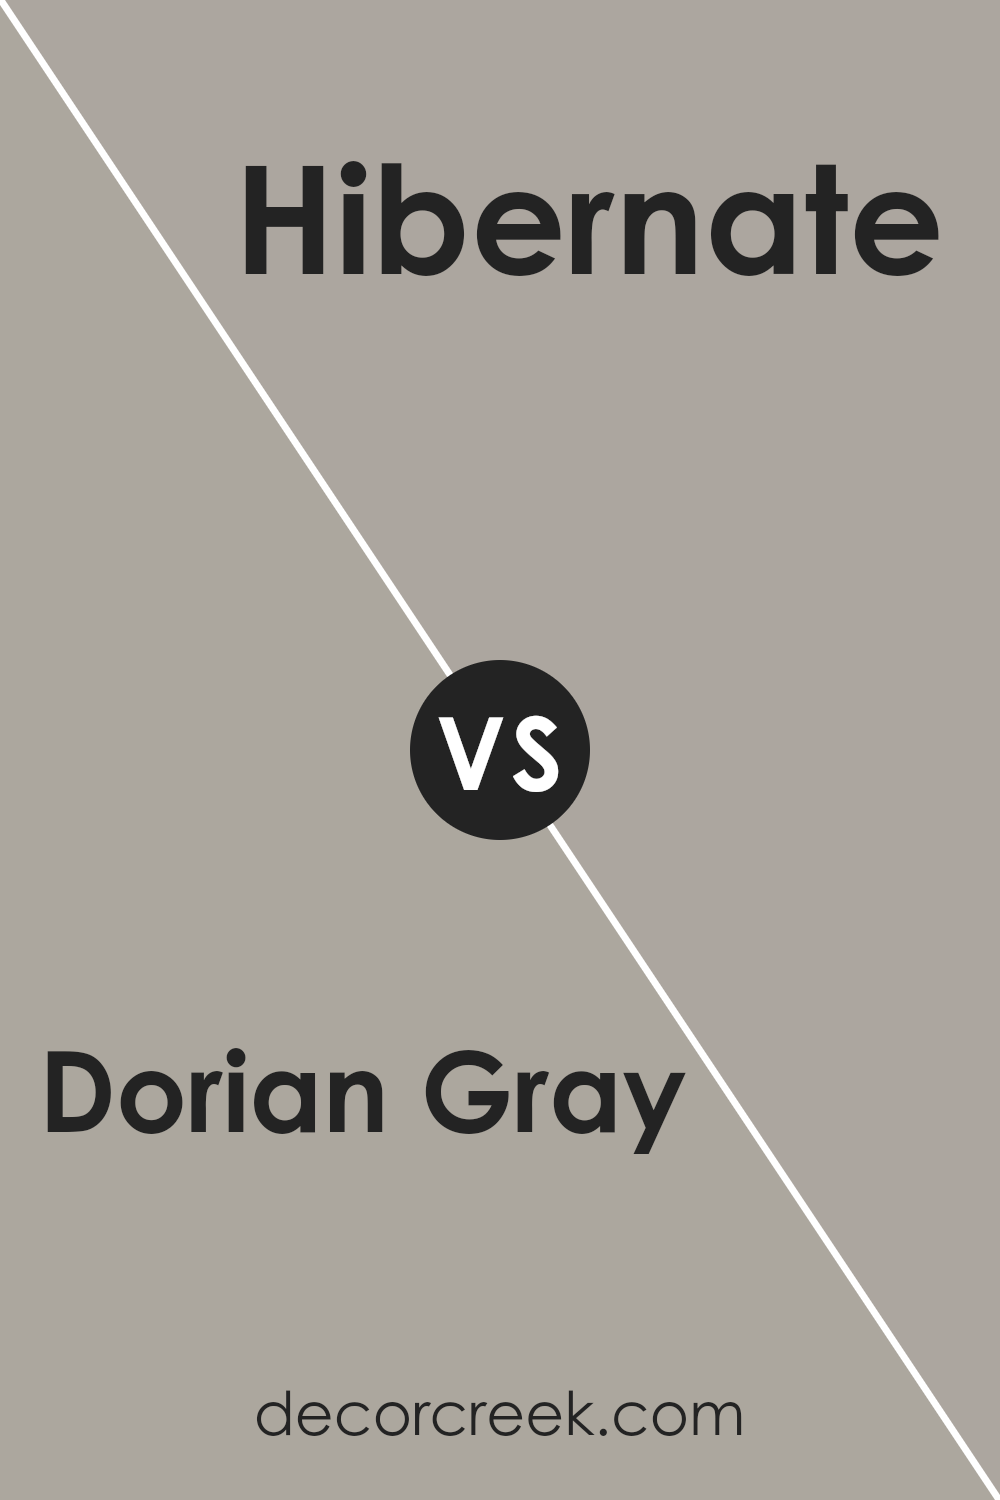 dorian_gray_sw_7017_vs_hibernate_sw_9573